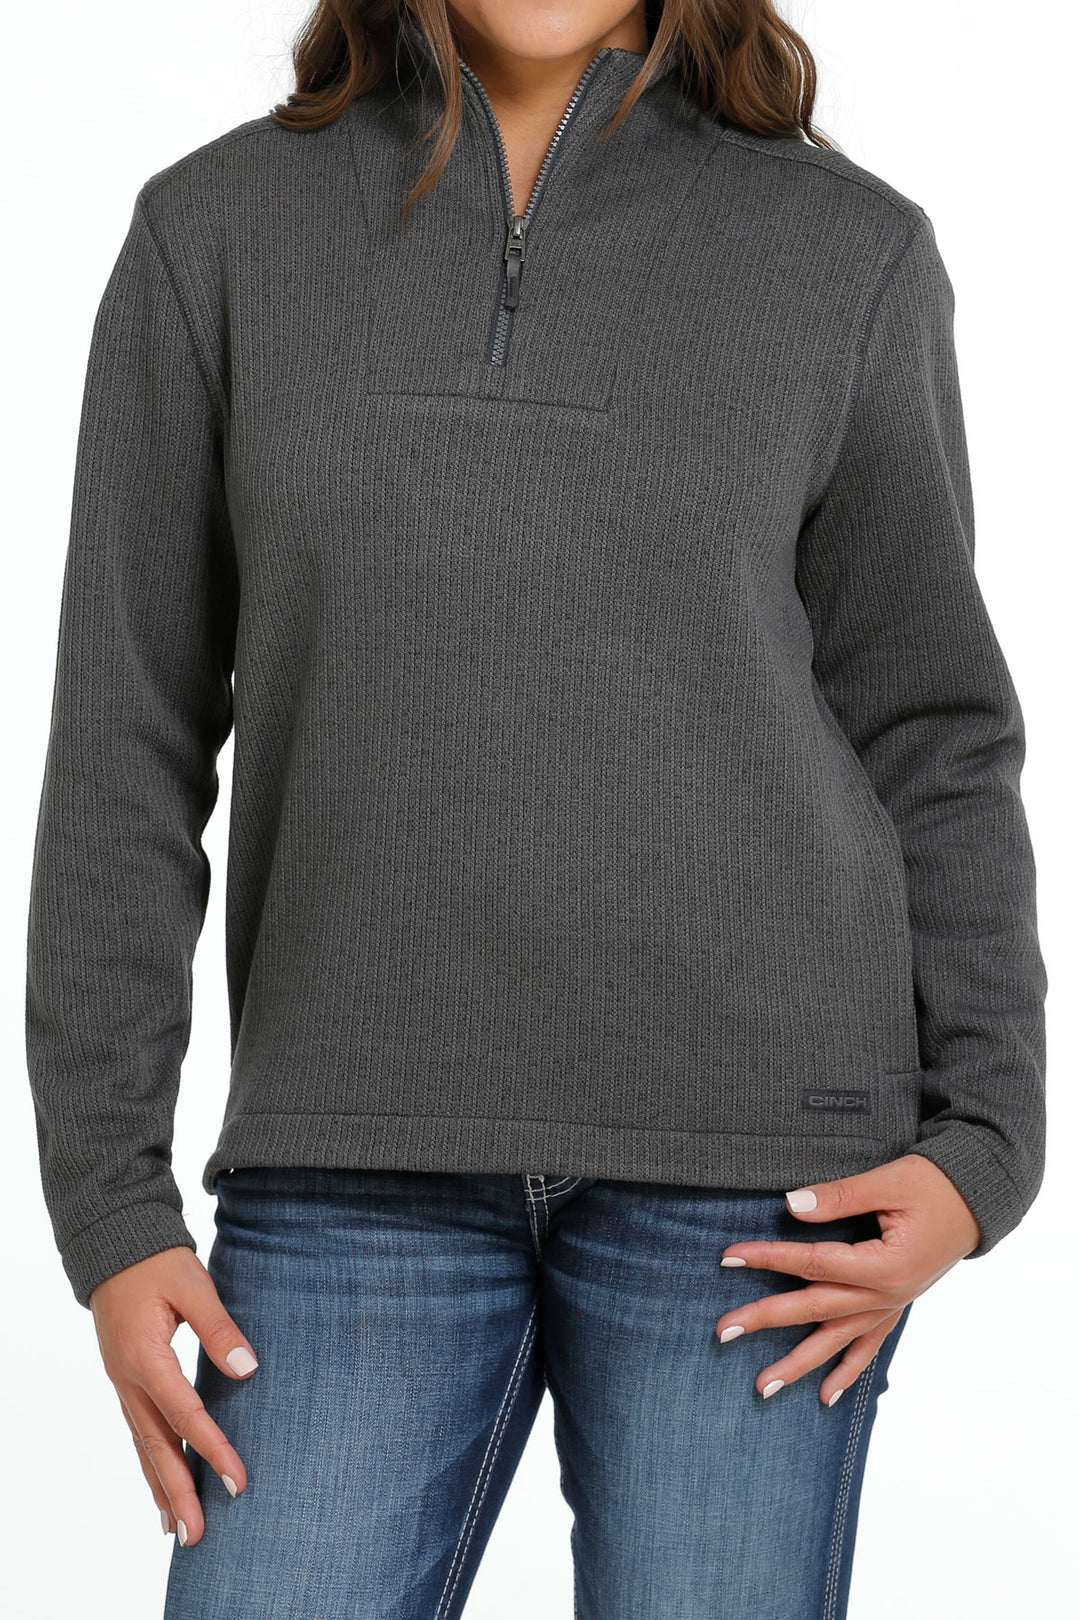 Cinch Women's Charcoal Quarter Zip Sweater Knit Pullover